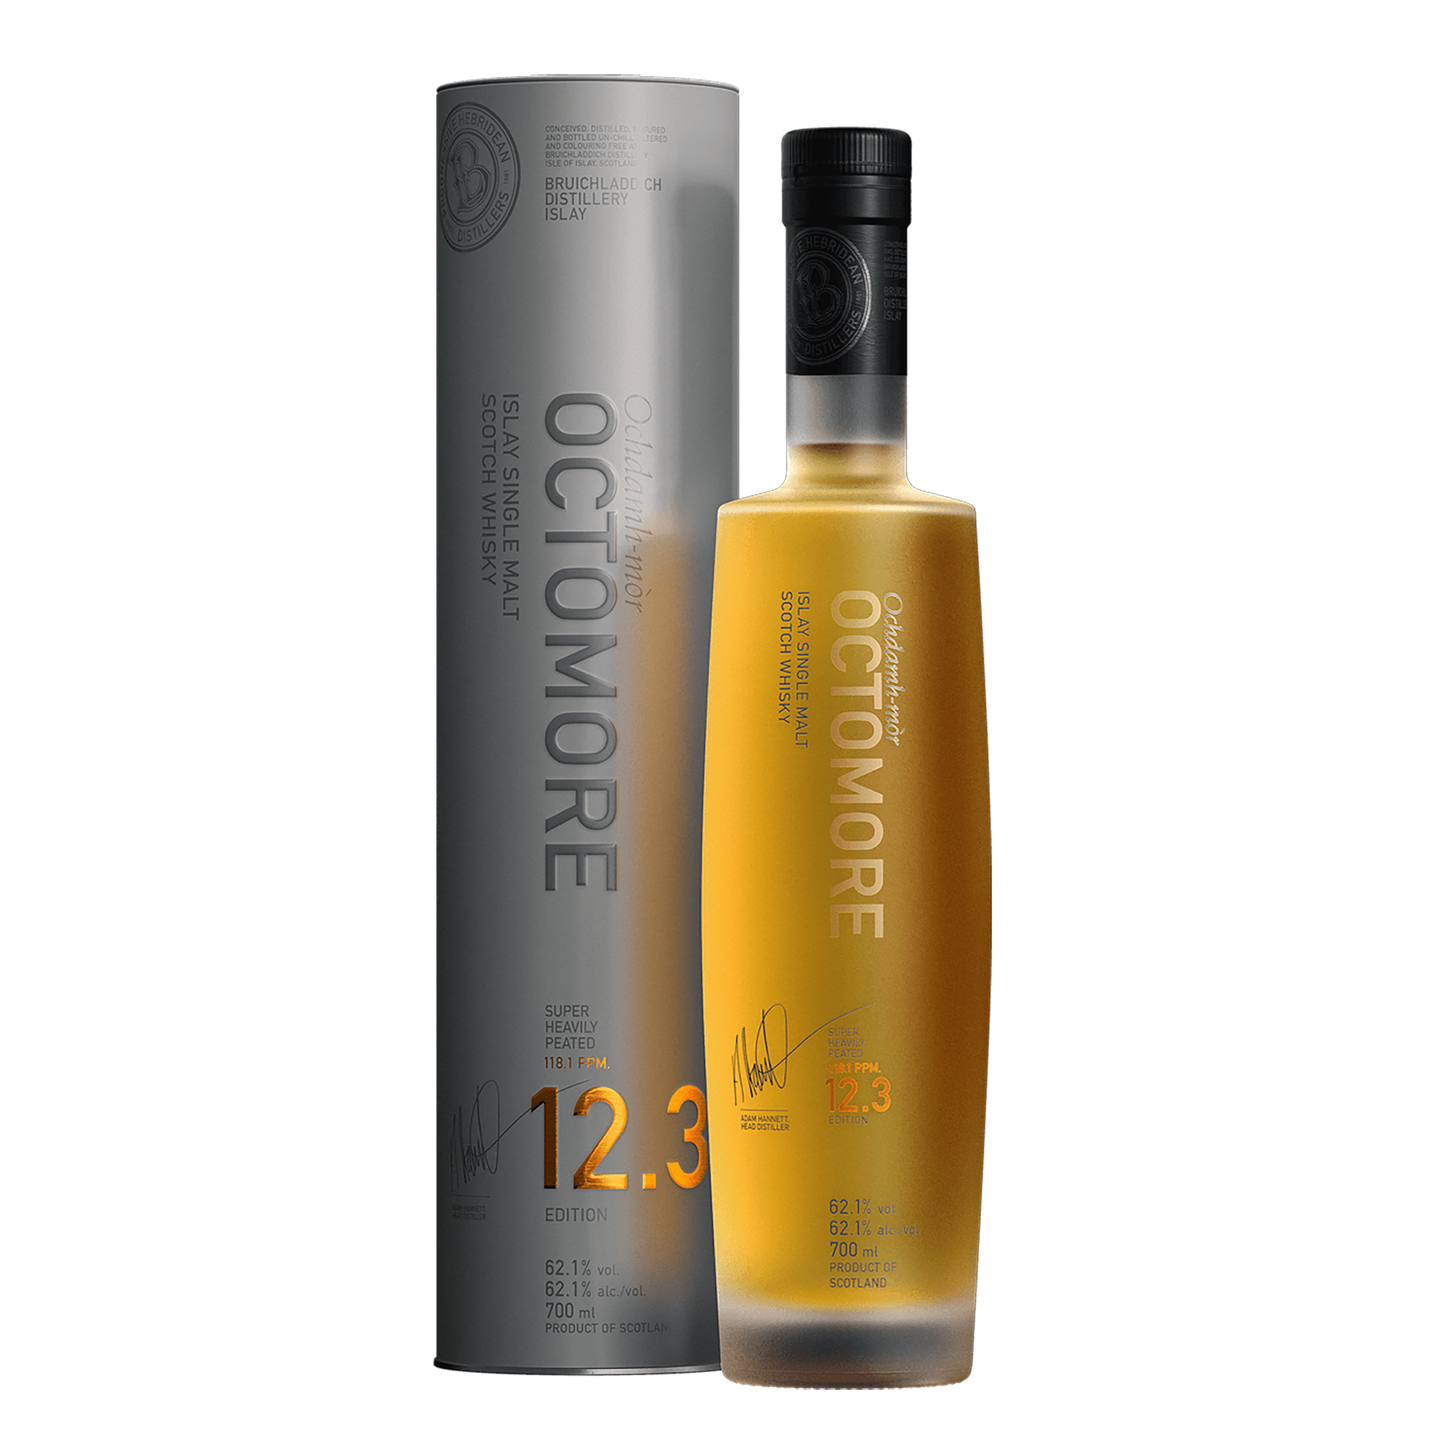 Bruichladdich Octomore 12.3 Cask Strength Single Malt Scotch Whisky 700ml